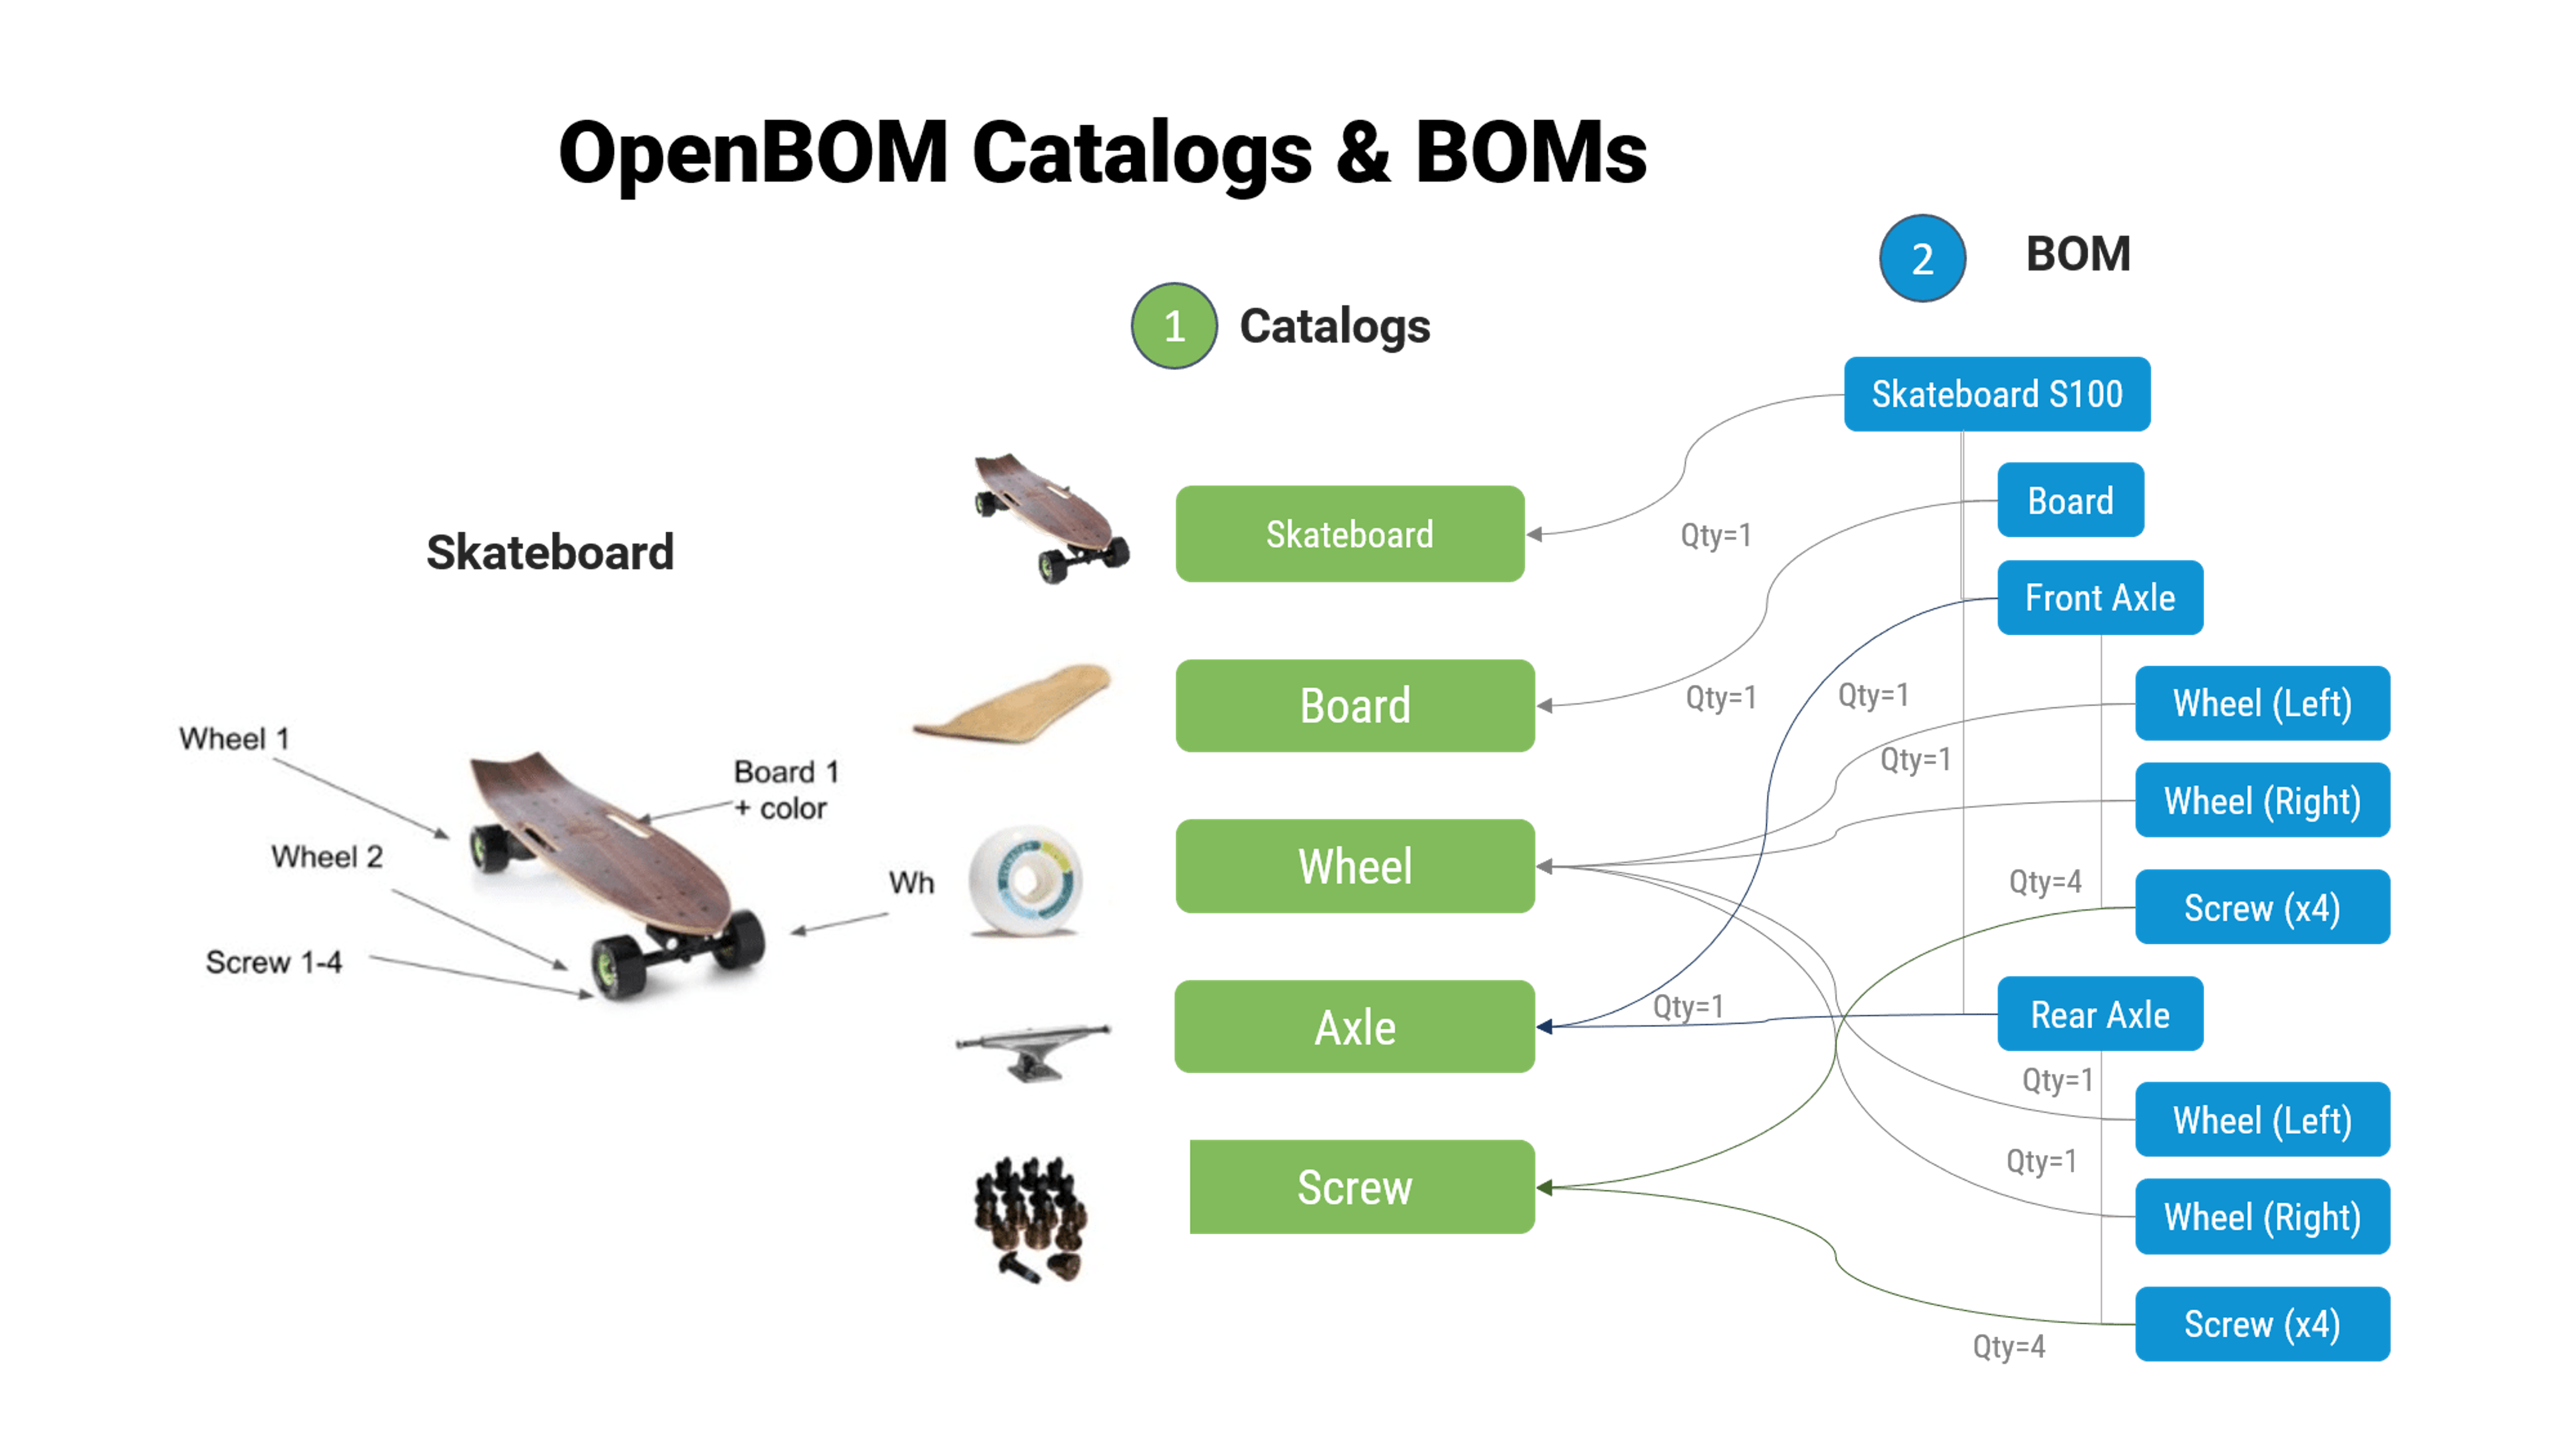 OpenBOM Drive – OpenBOM Training Library